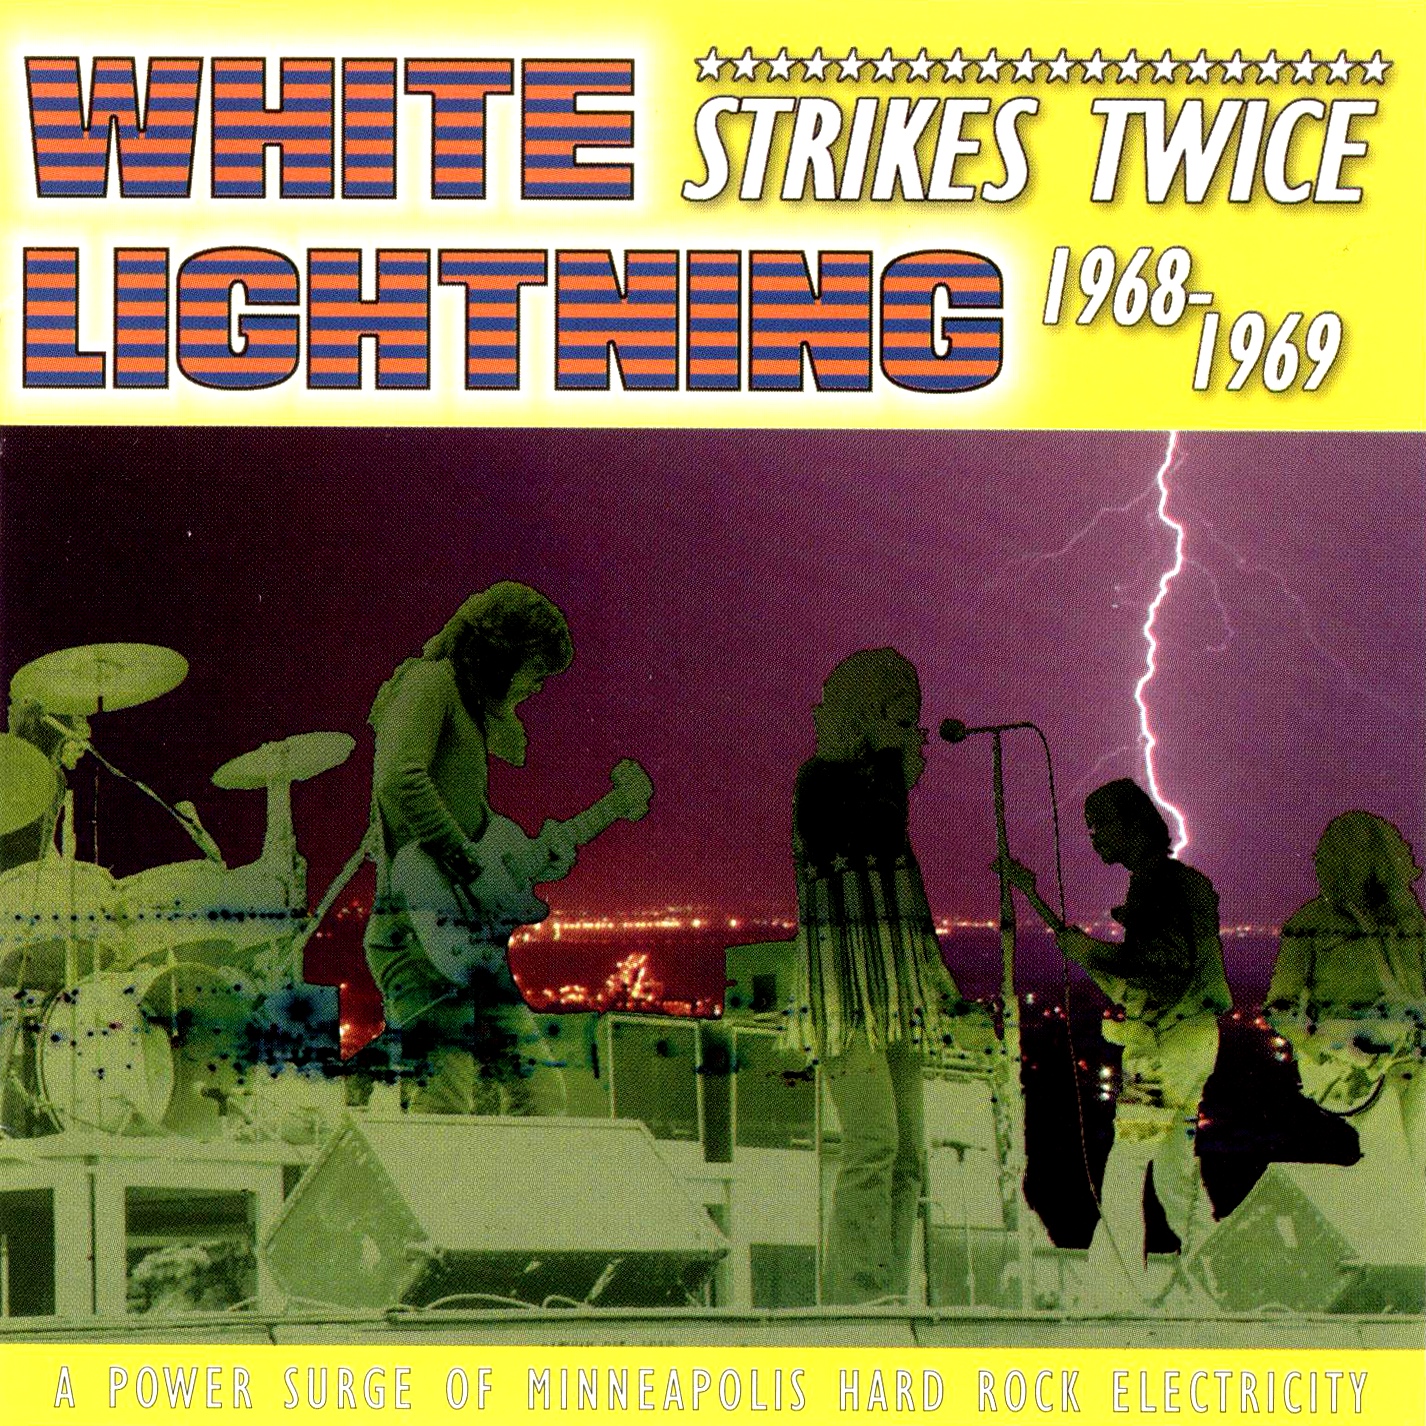 The lightning last night. Lightning Strikes twice. White Lightning группа. Nelson - Lightning Strikes twice. The Litter - $ 100 Fine (1968).